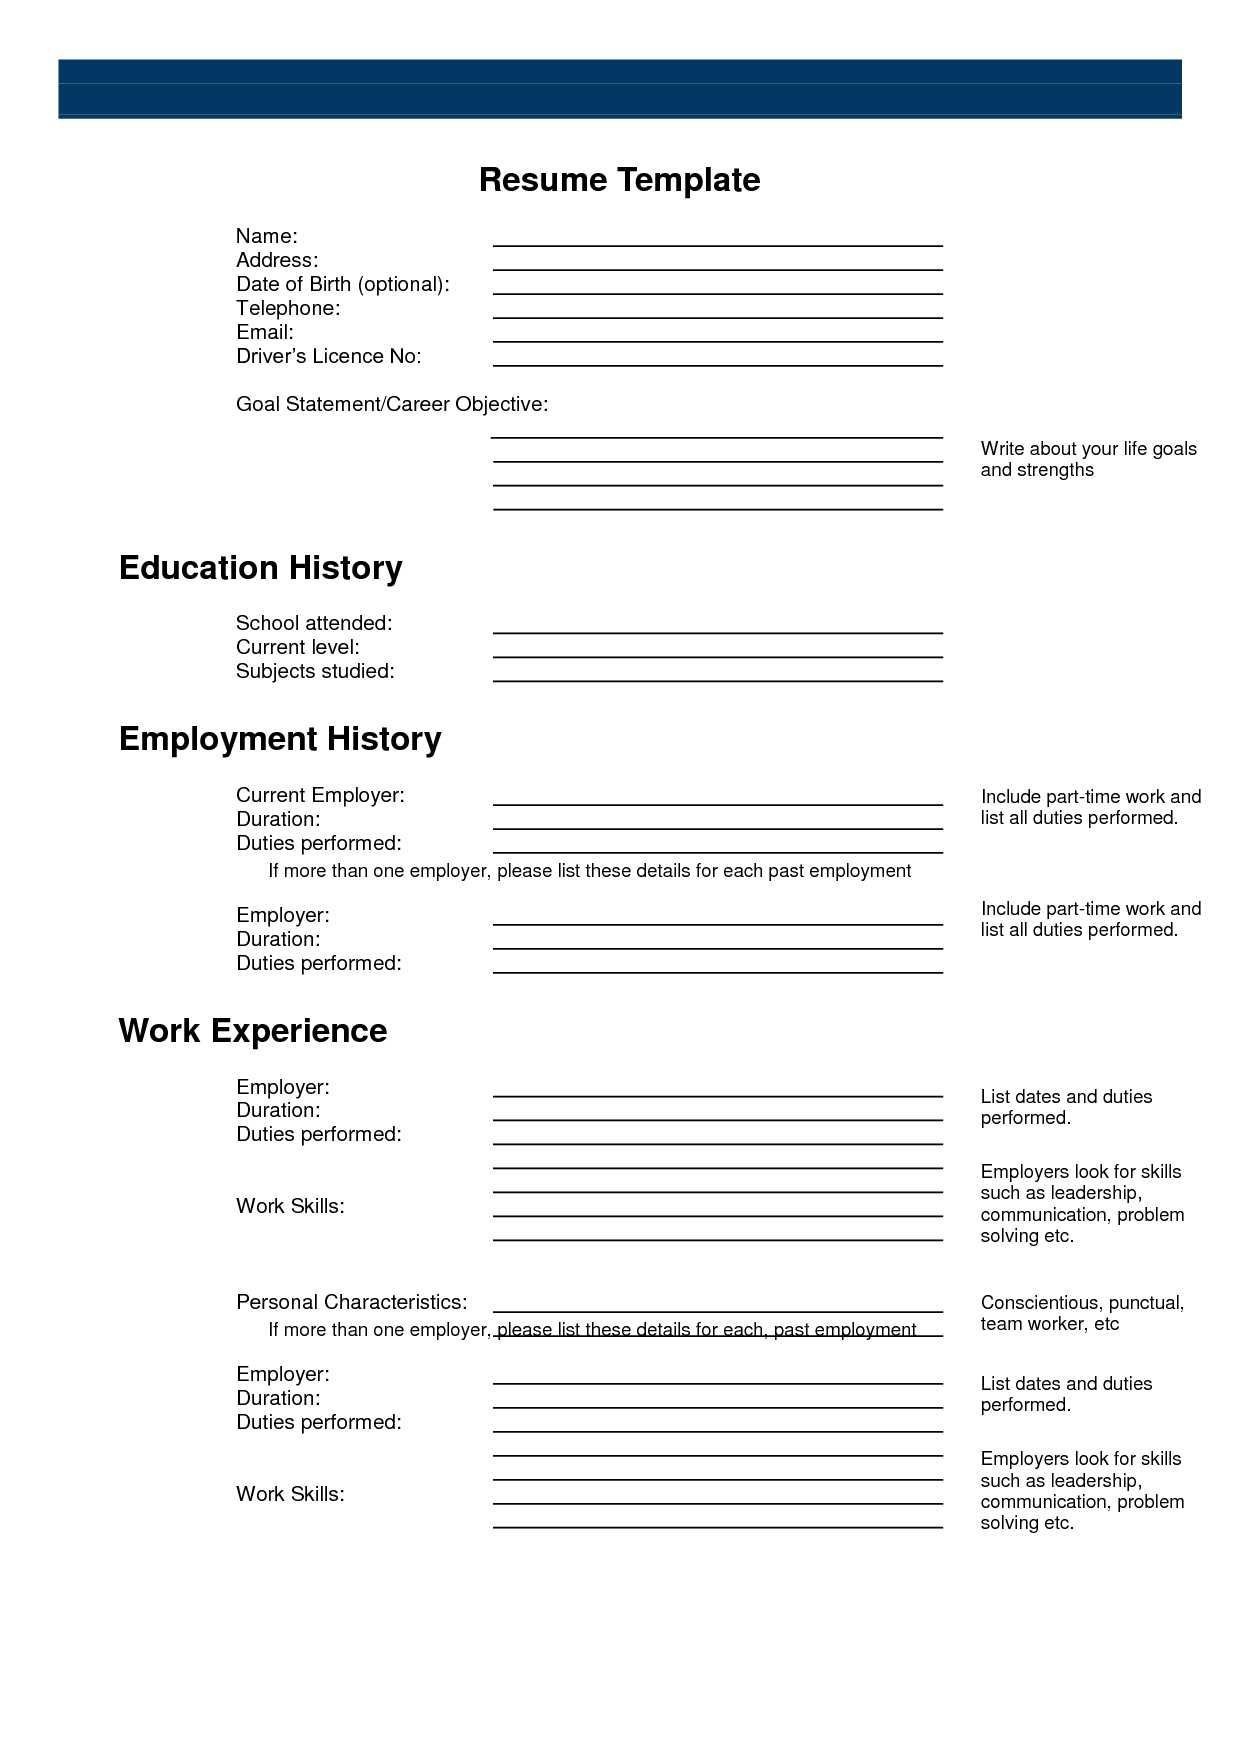 Pinanishfeds On Resumes | Free Printable Resume, Free Printable - Free Printable Professional Resume Templates